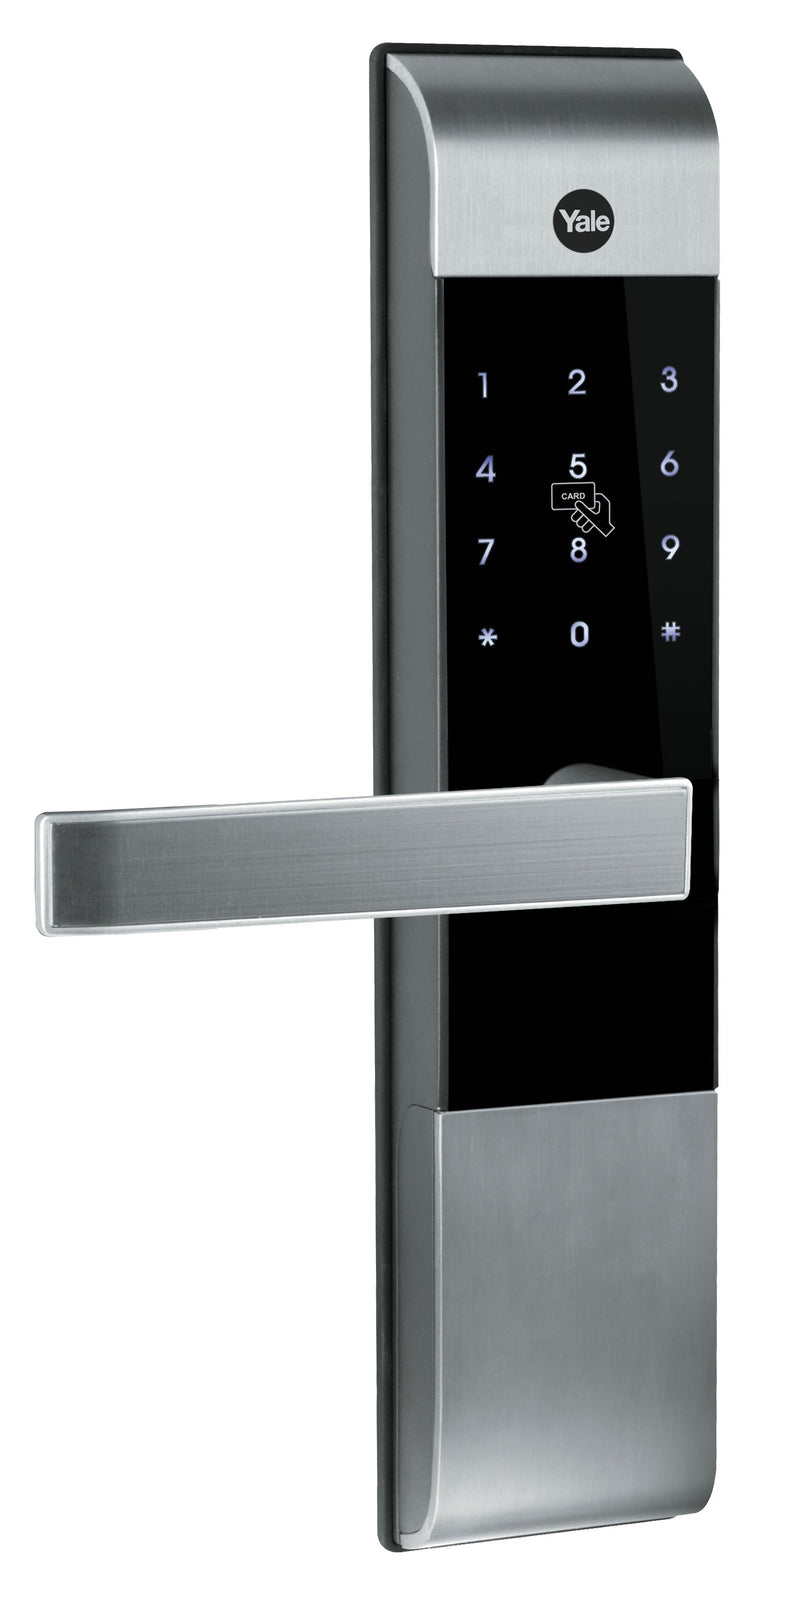 Yale YDM3109 yale digital door lock-digitalRFDI card lock with tripple access modes: proximity card, code & mechanical override key - Alibhai Shariff Direct